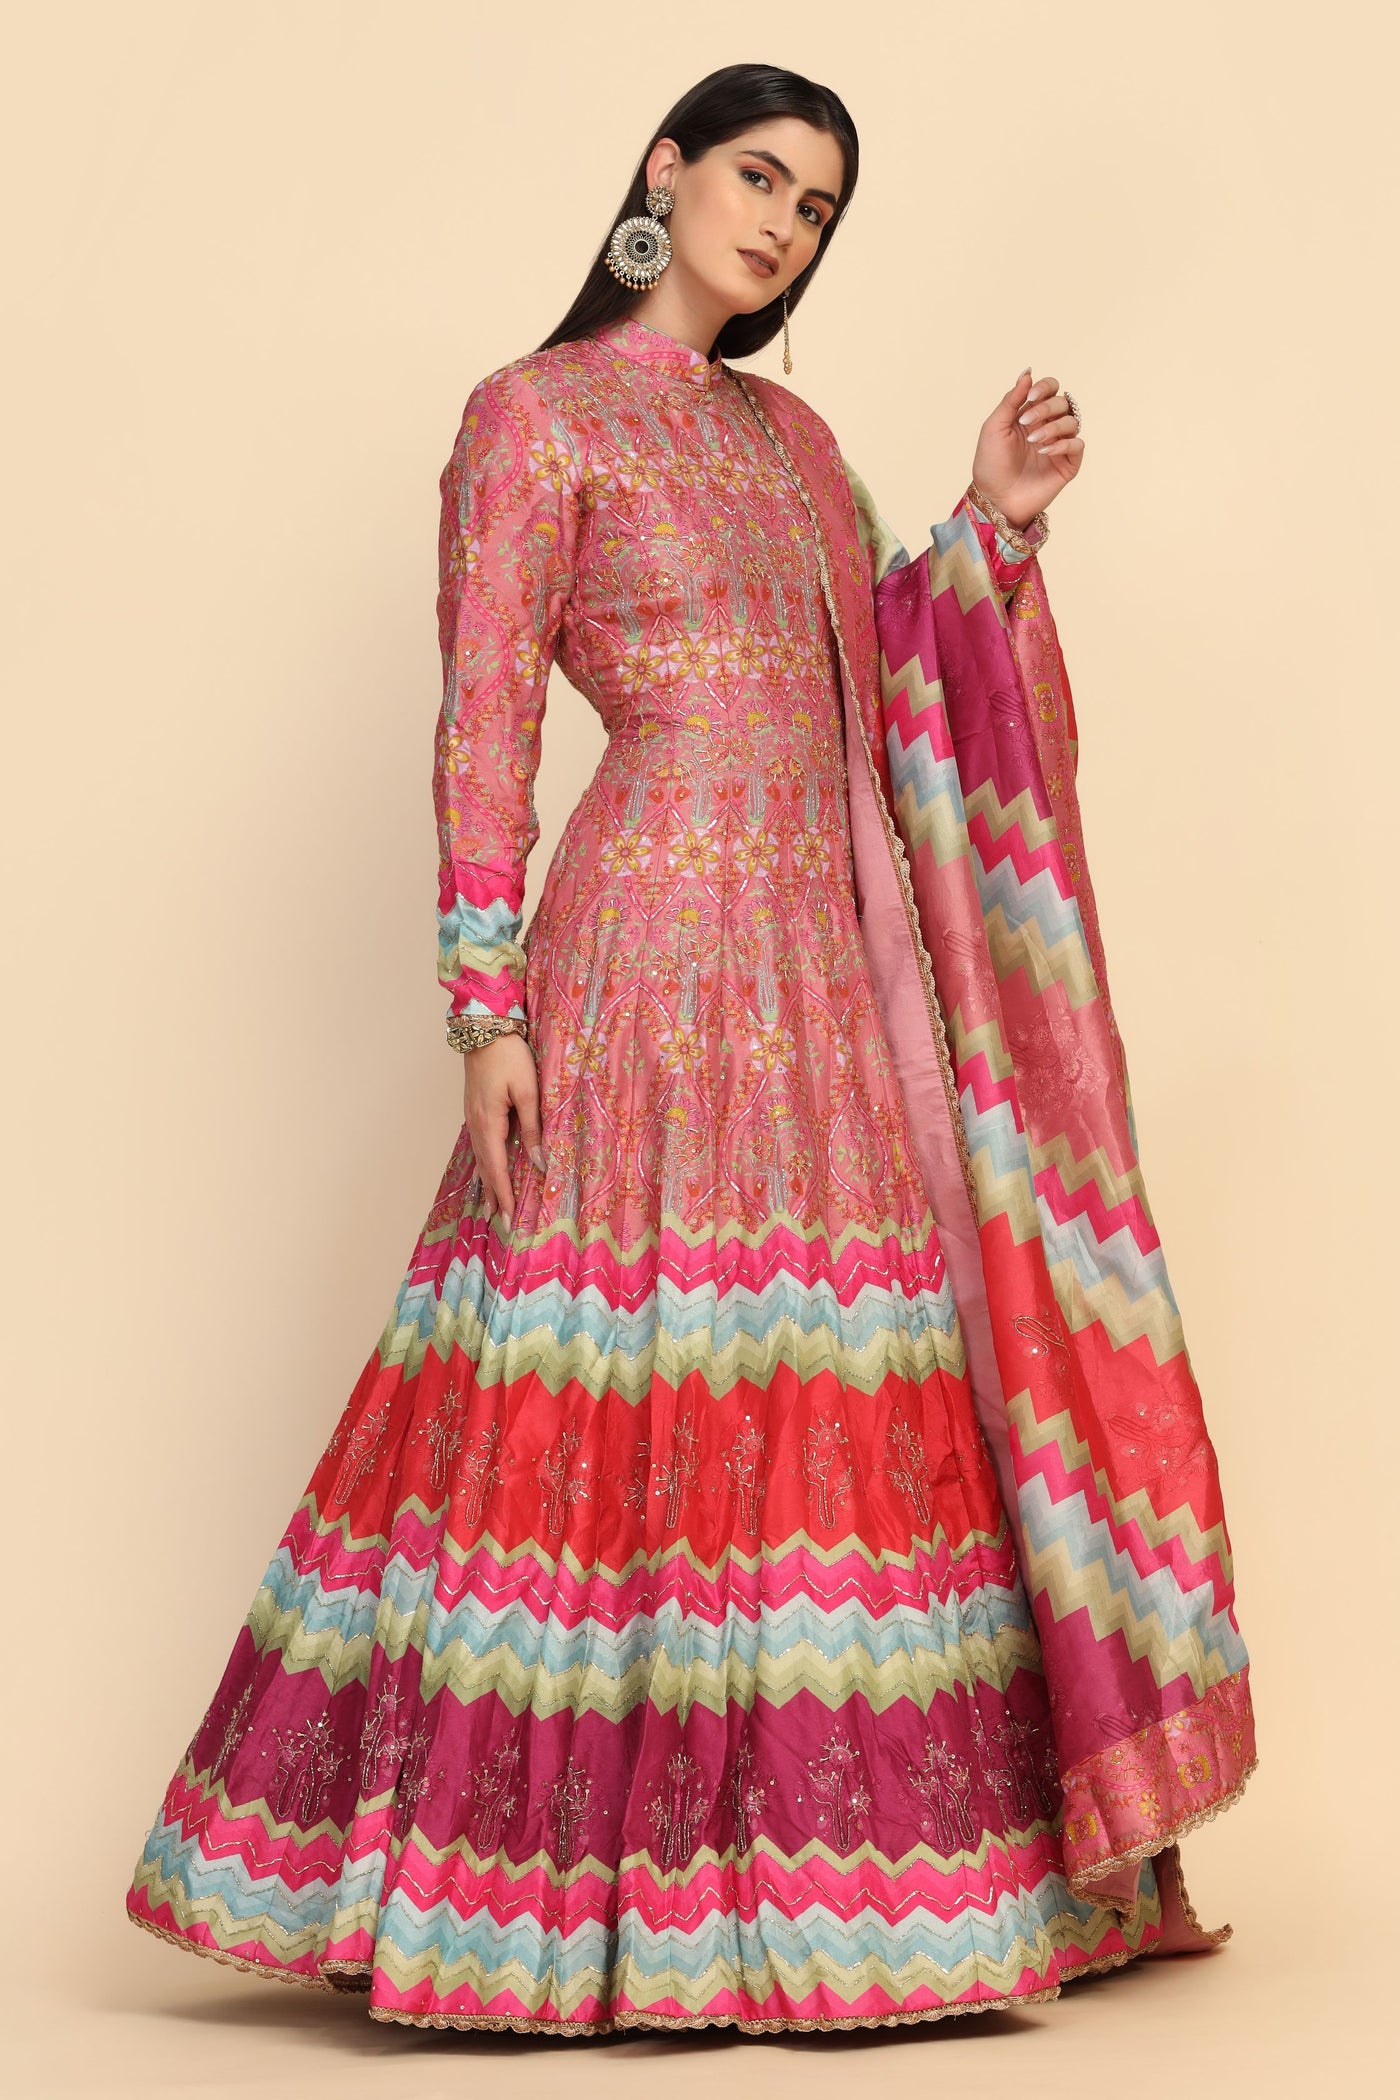 Adorable multi color floral motif embroidered dress